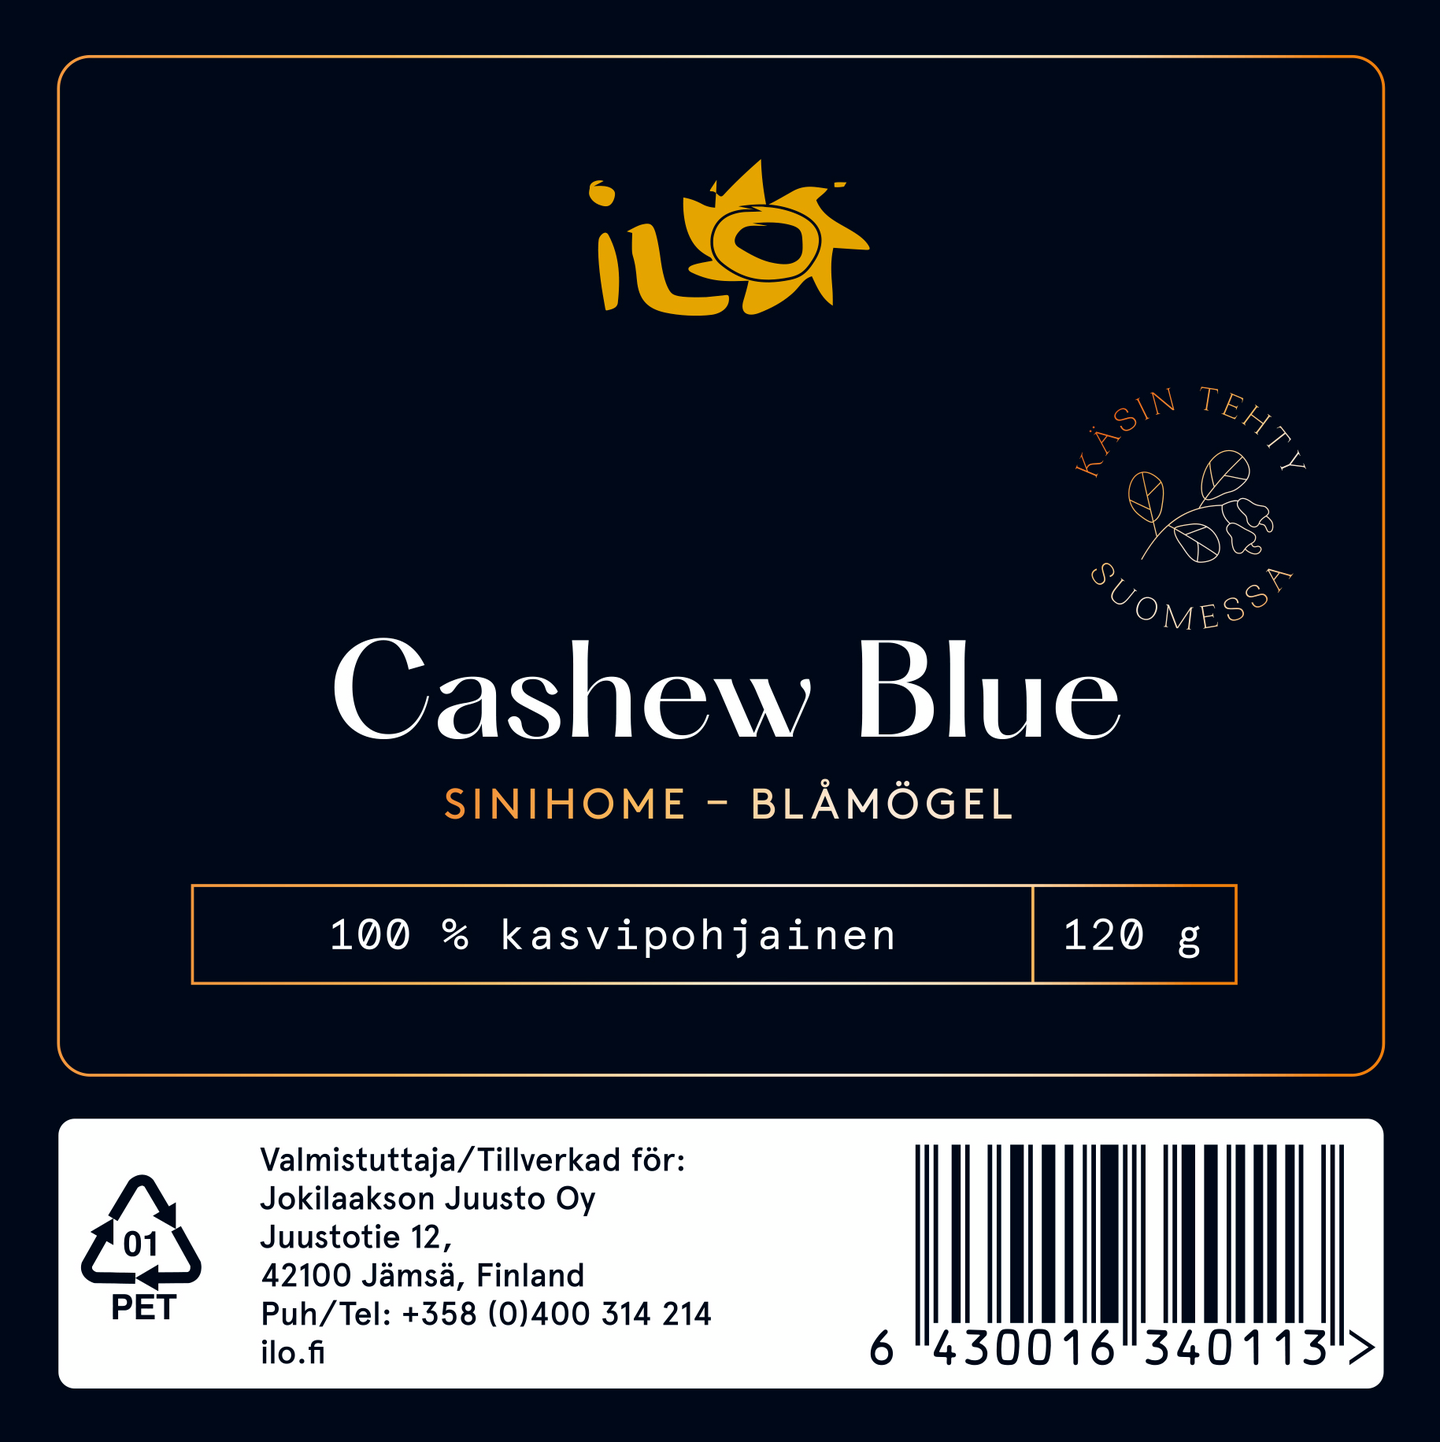 Ilo Cashew Blue 120g